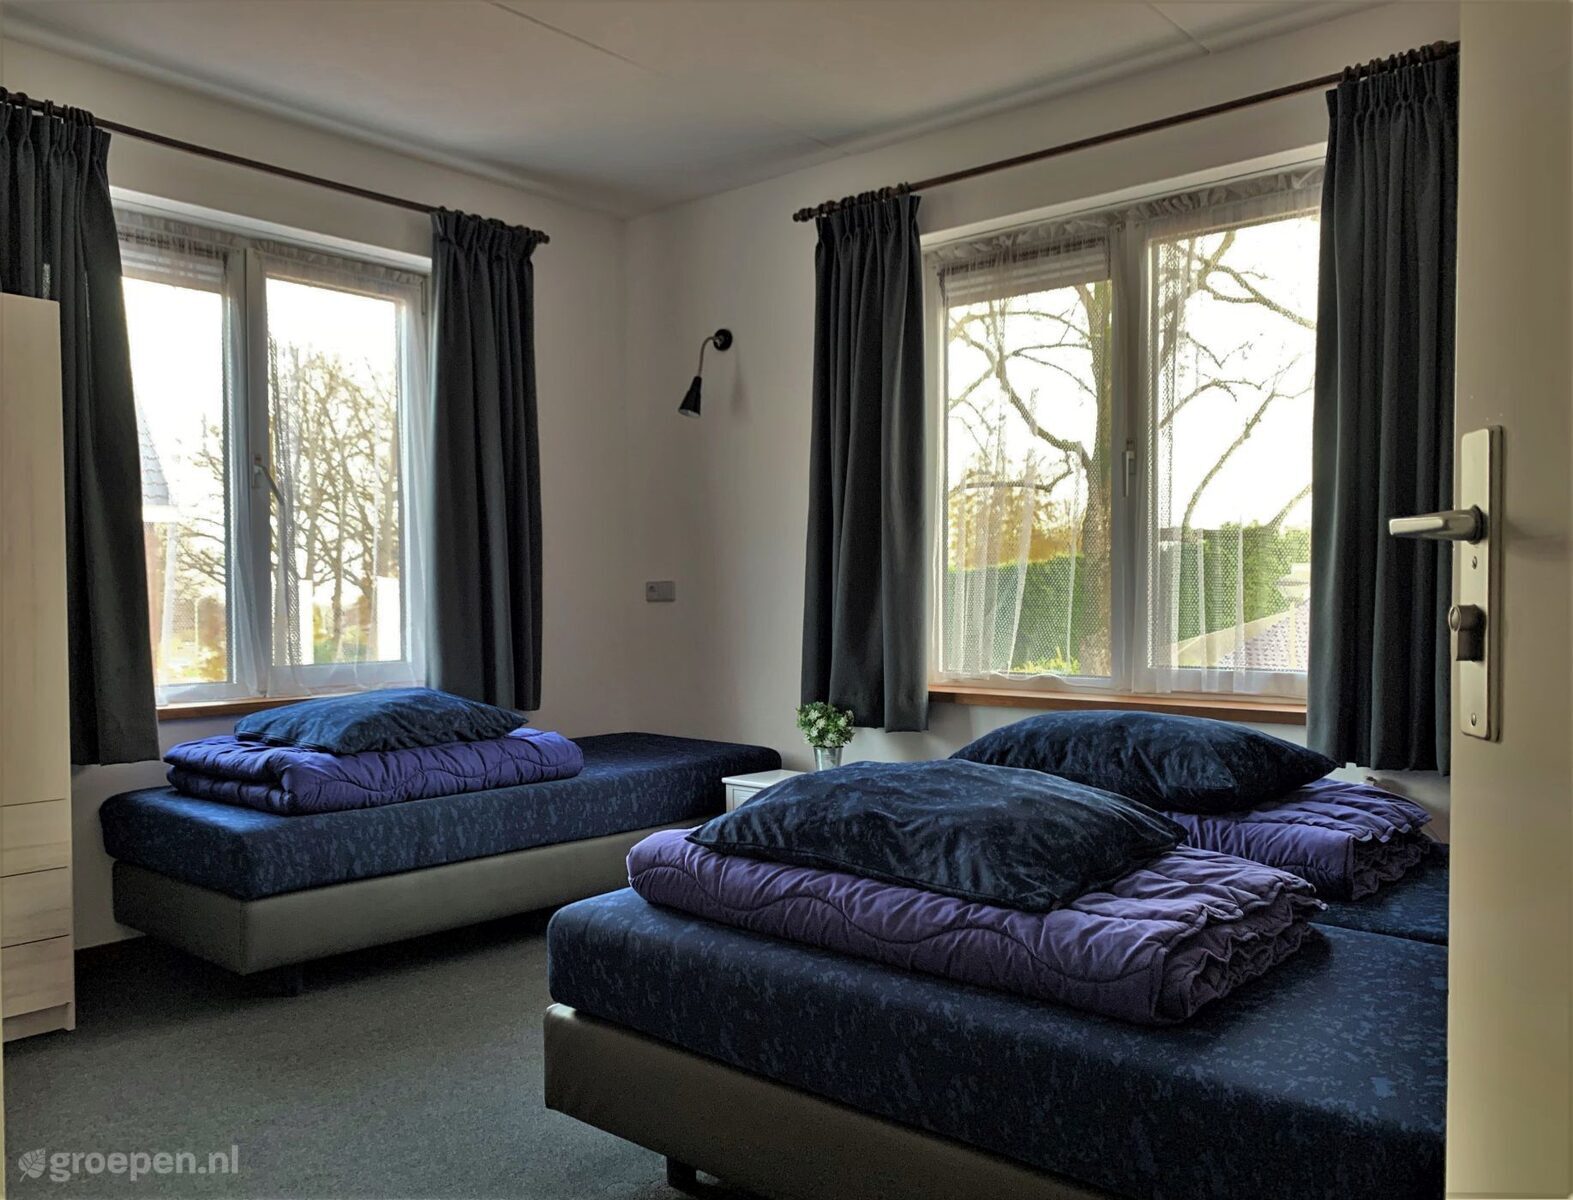 Group accommodation Groesbeek